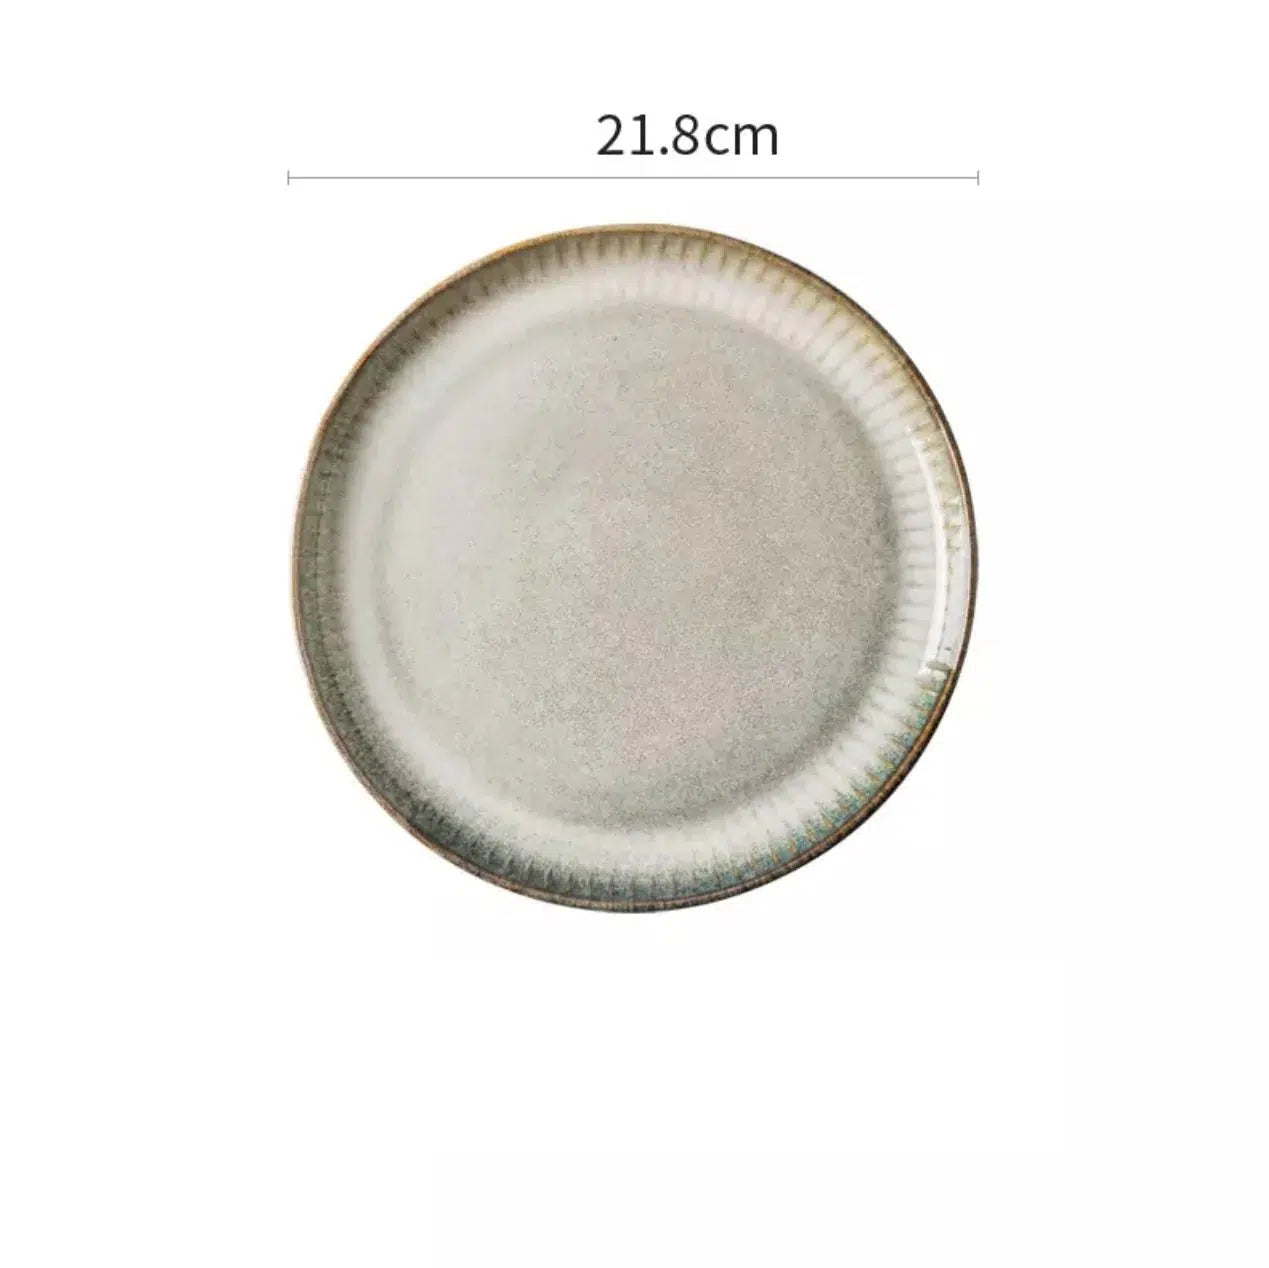 Rustic Ceramic Tableware Hestia + Co. Large plate 